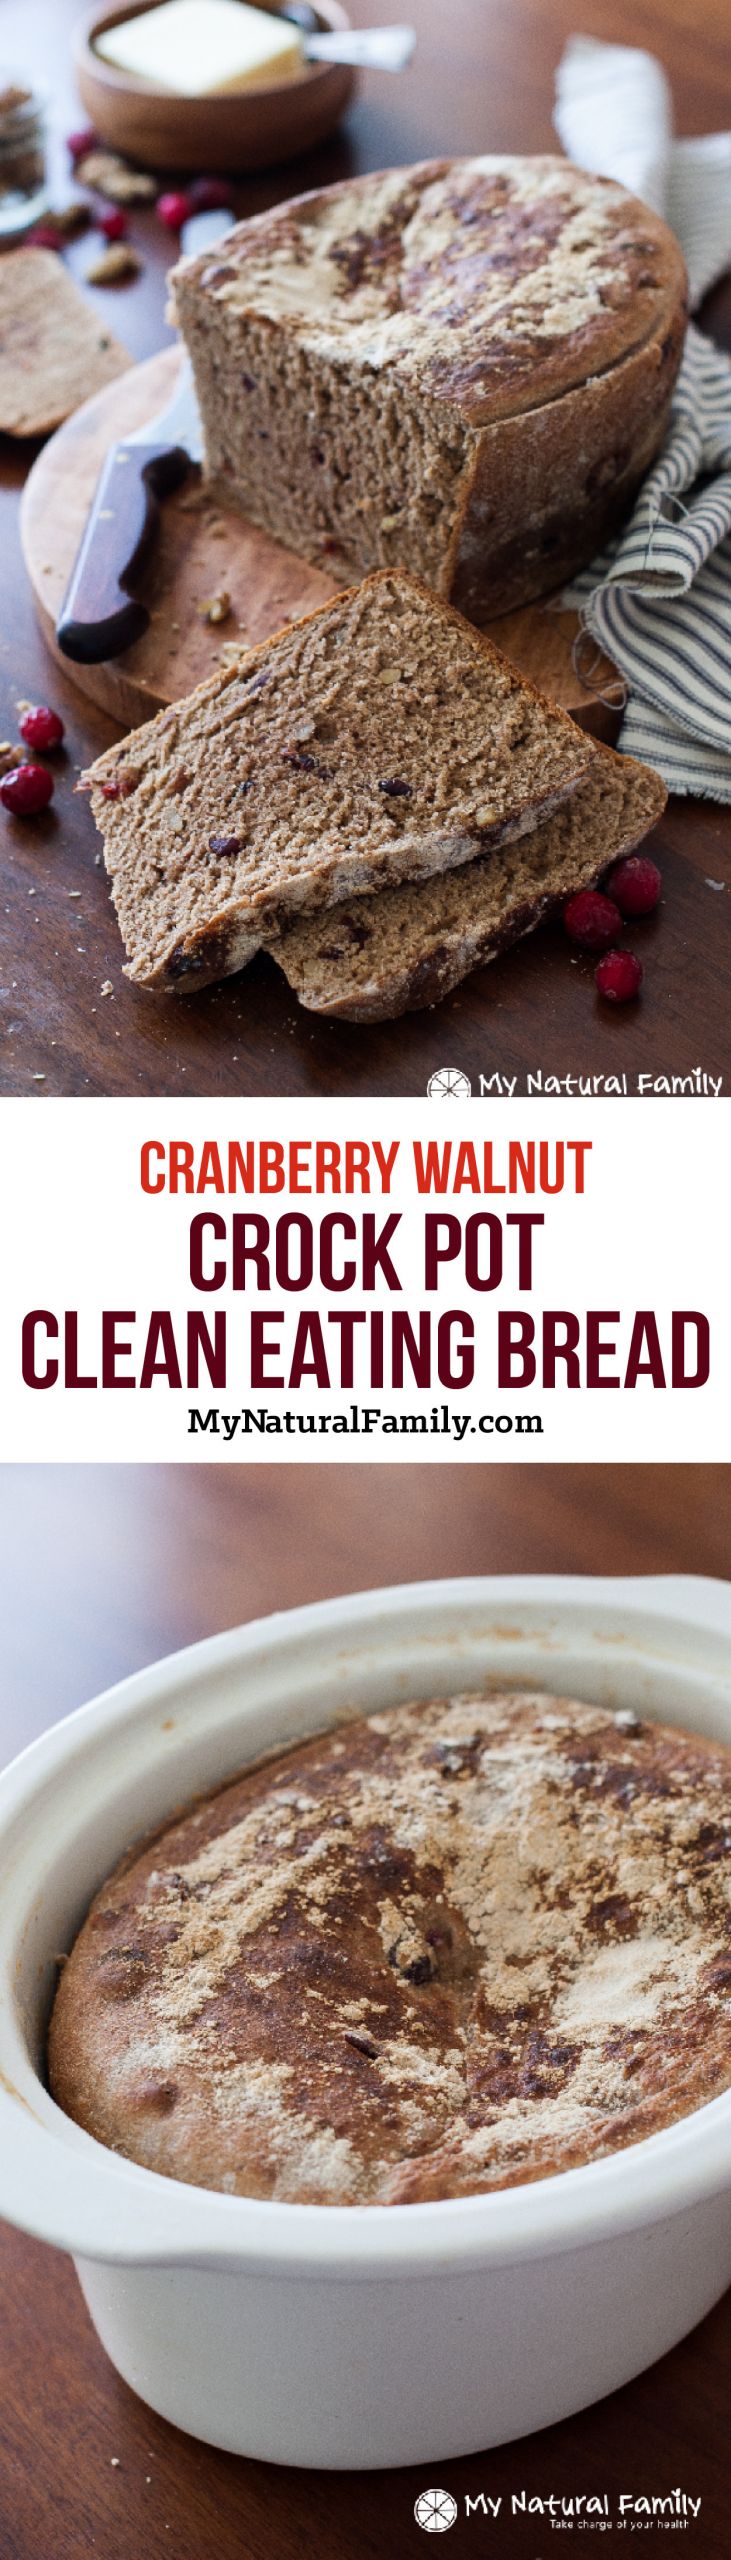 Heart Healthy Crockpot Recipes
 Whole Wheat Crock Pot Bread Recipe